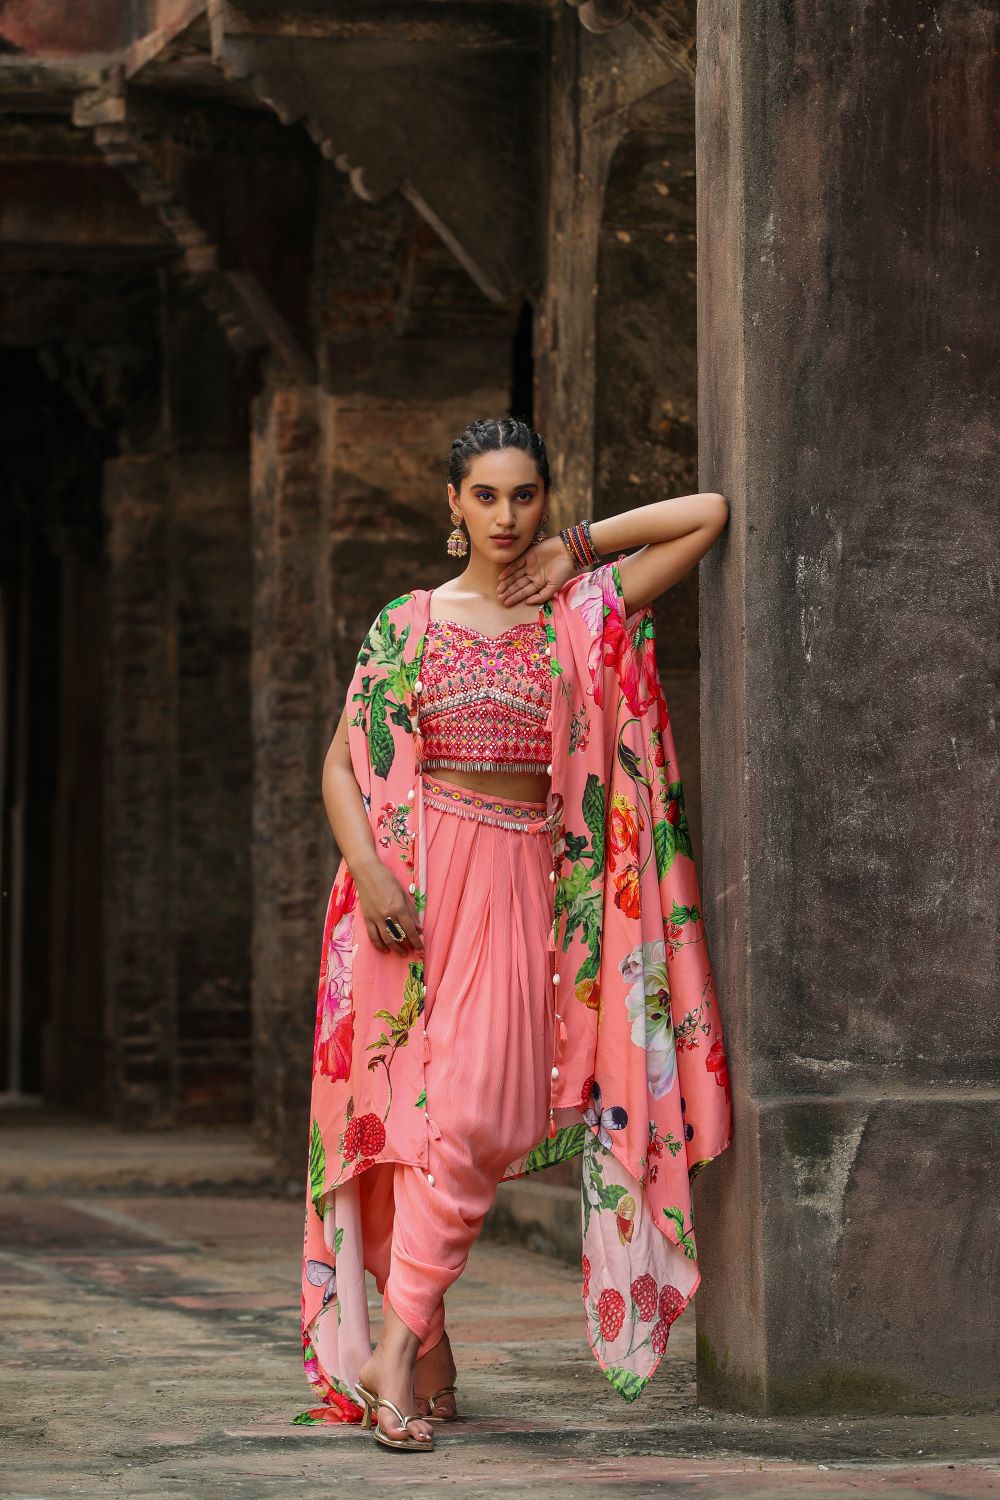 Women Dresses - Buy Women Dresses Online Starting at Just ₹187 | Meesho